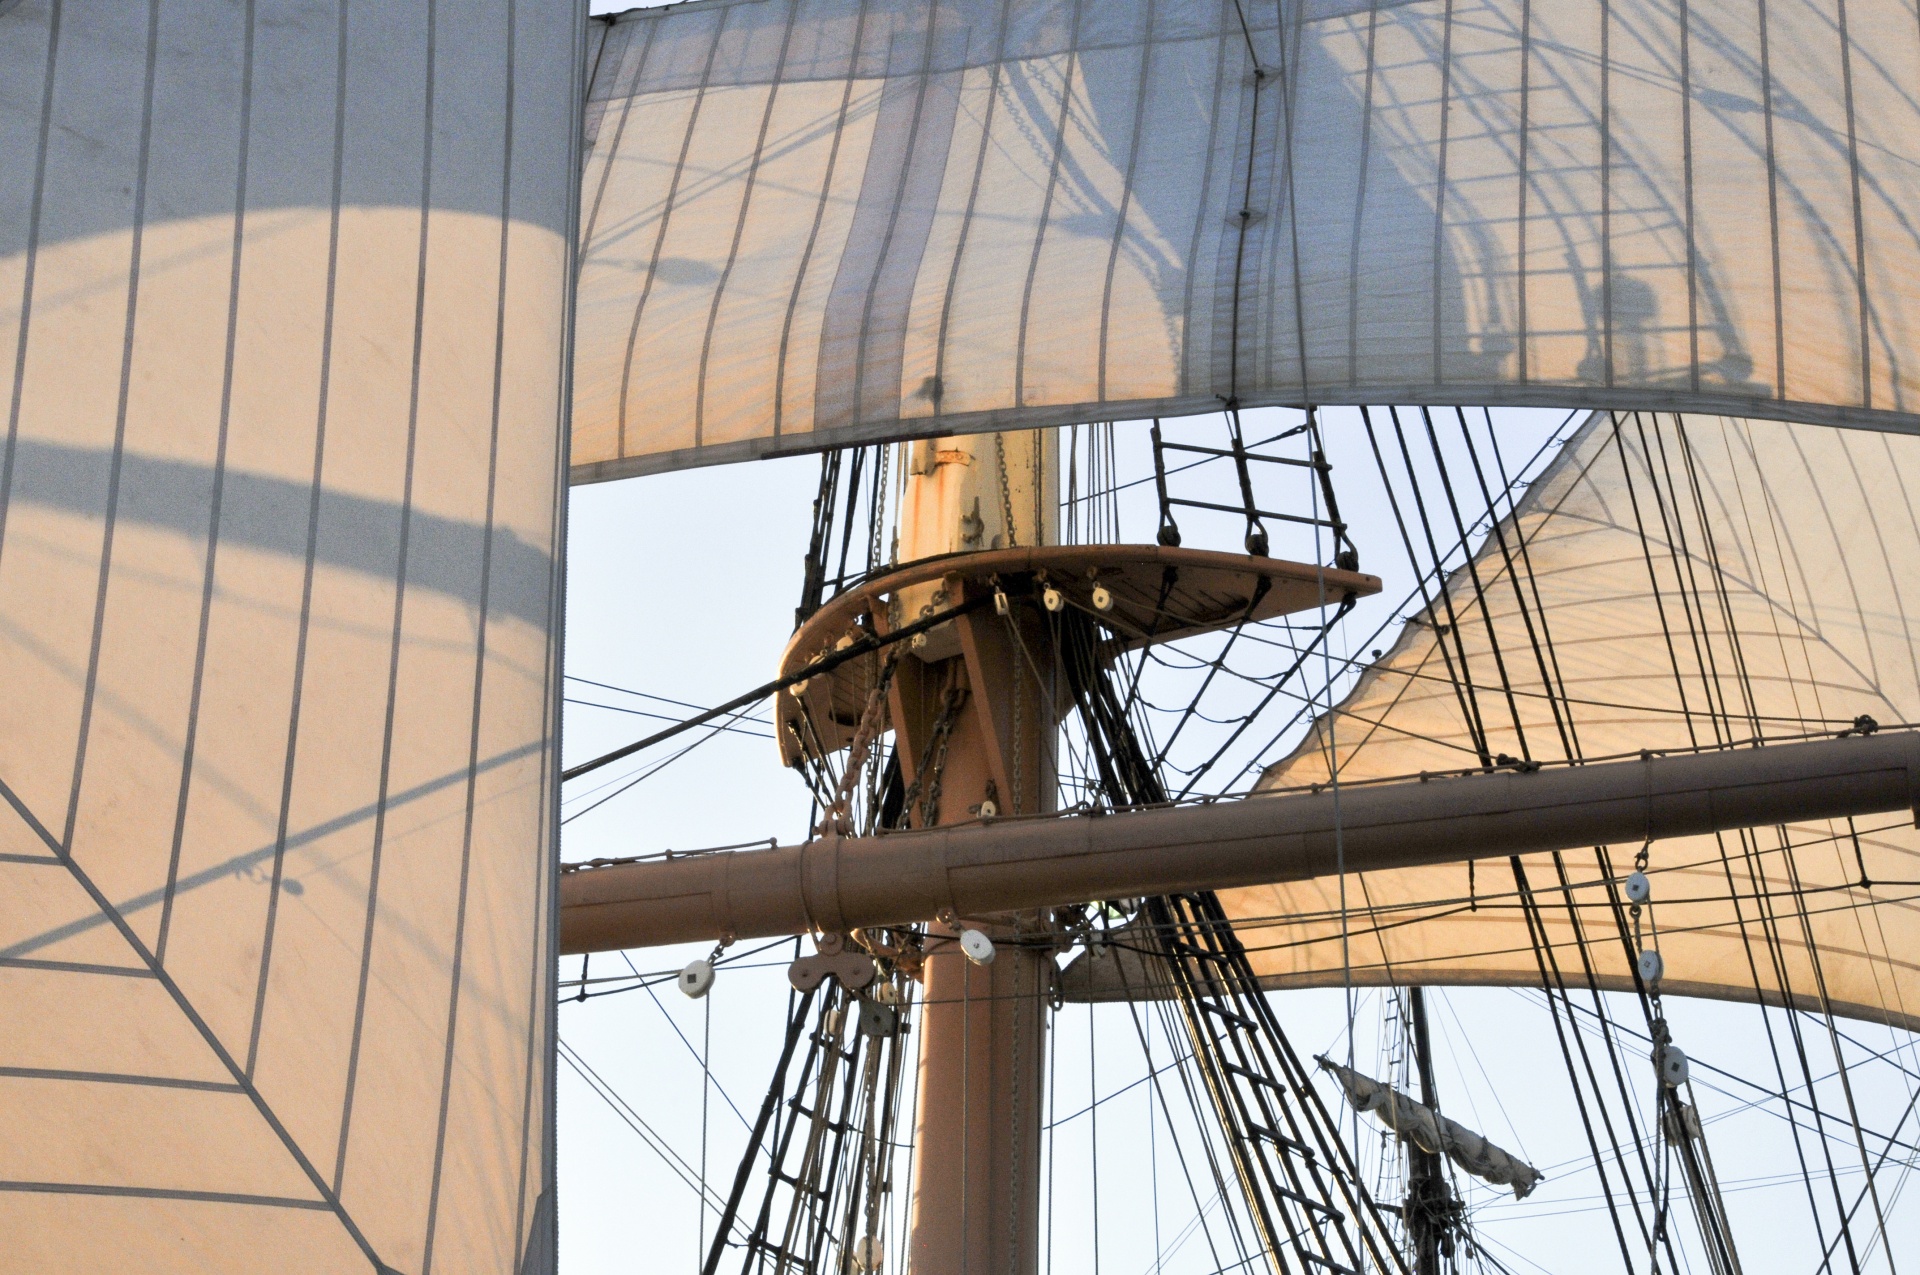 close up of sailing masts of old sailing ship from 1800's